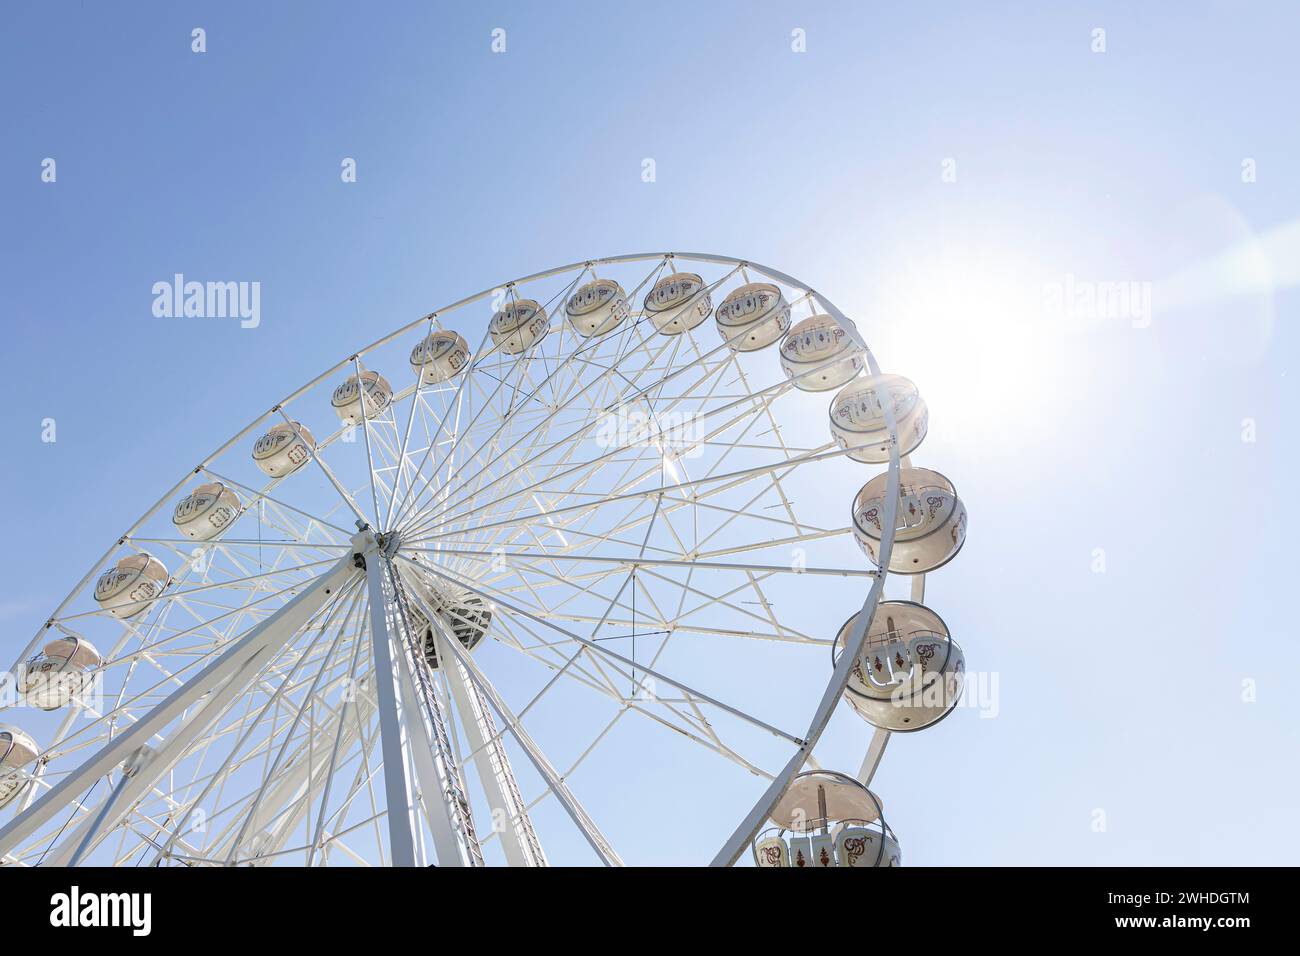 White Ferris wheel in front of a blue sky in Warnemünde, Hanseatic city of Rostock, Baltic Sea coast, Mecklenburg-Western Pomerania, Germany, Europe Stock Photo